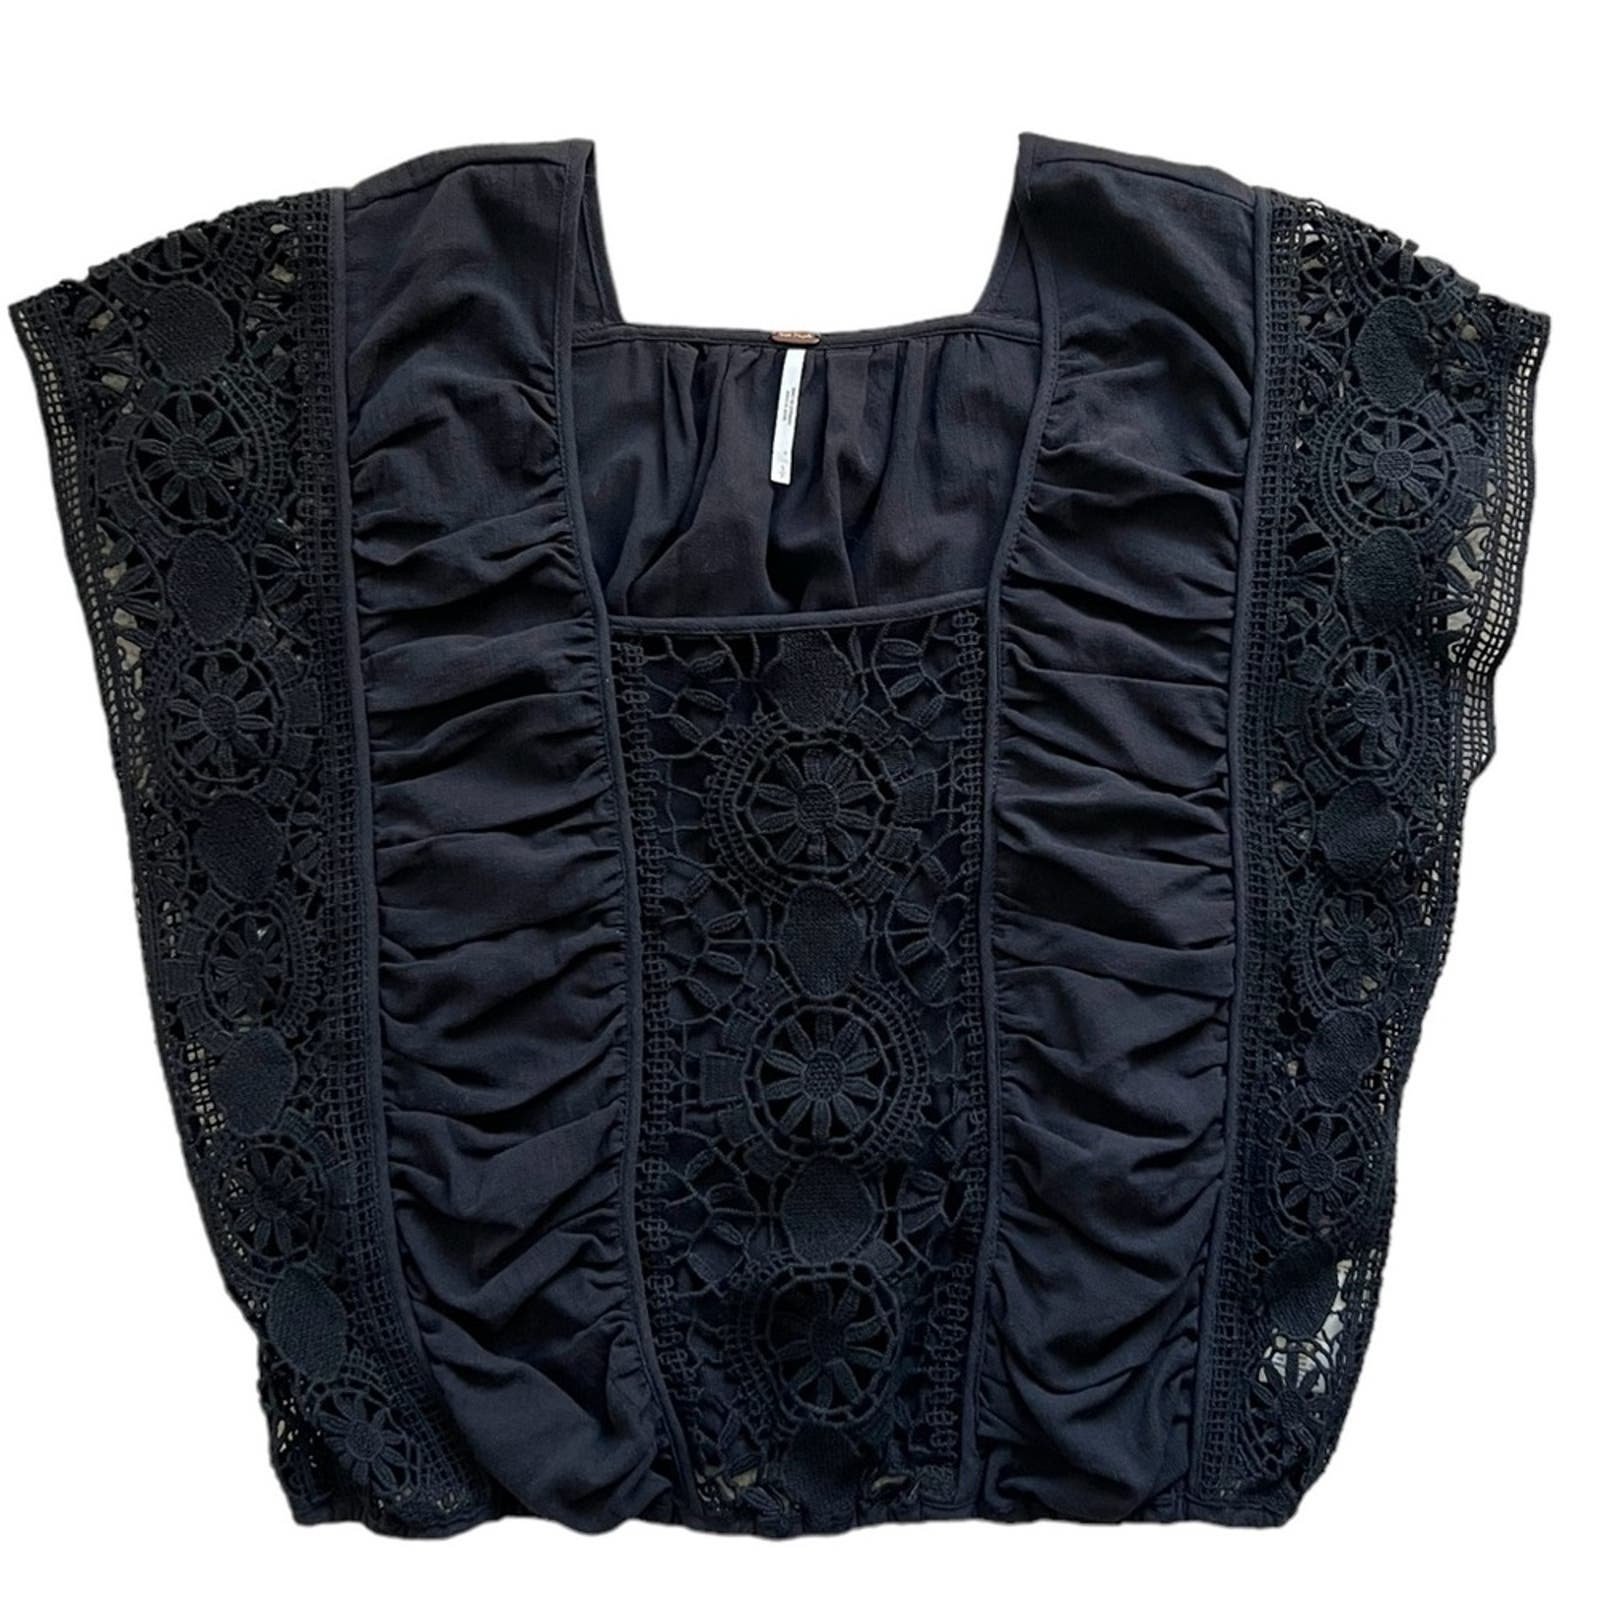 reasonable price Free People Boho Crochet knit top size womens small KCWQjF5NZ Online Exclusive